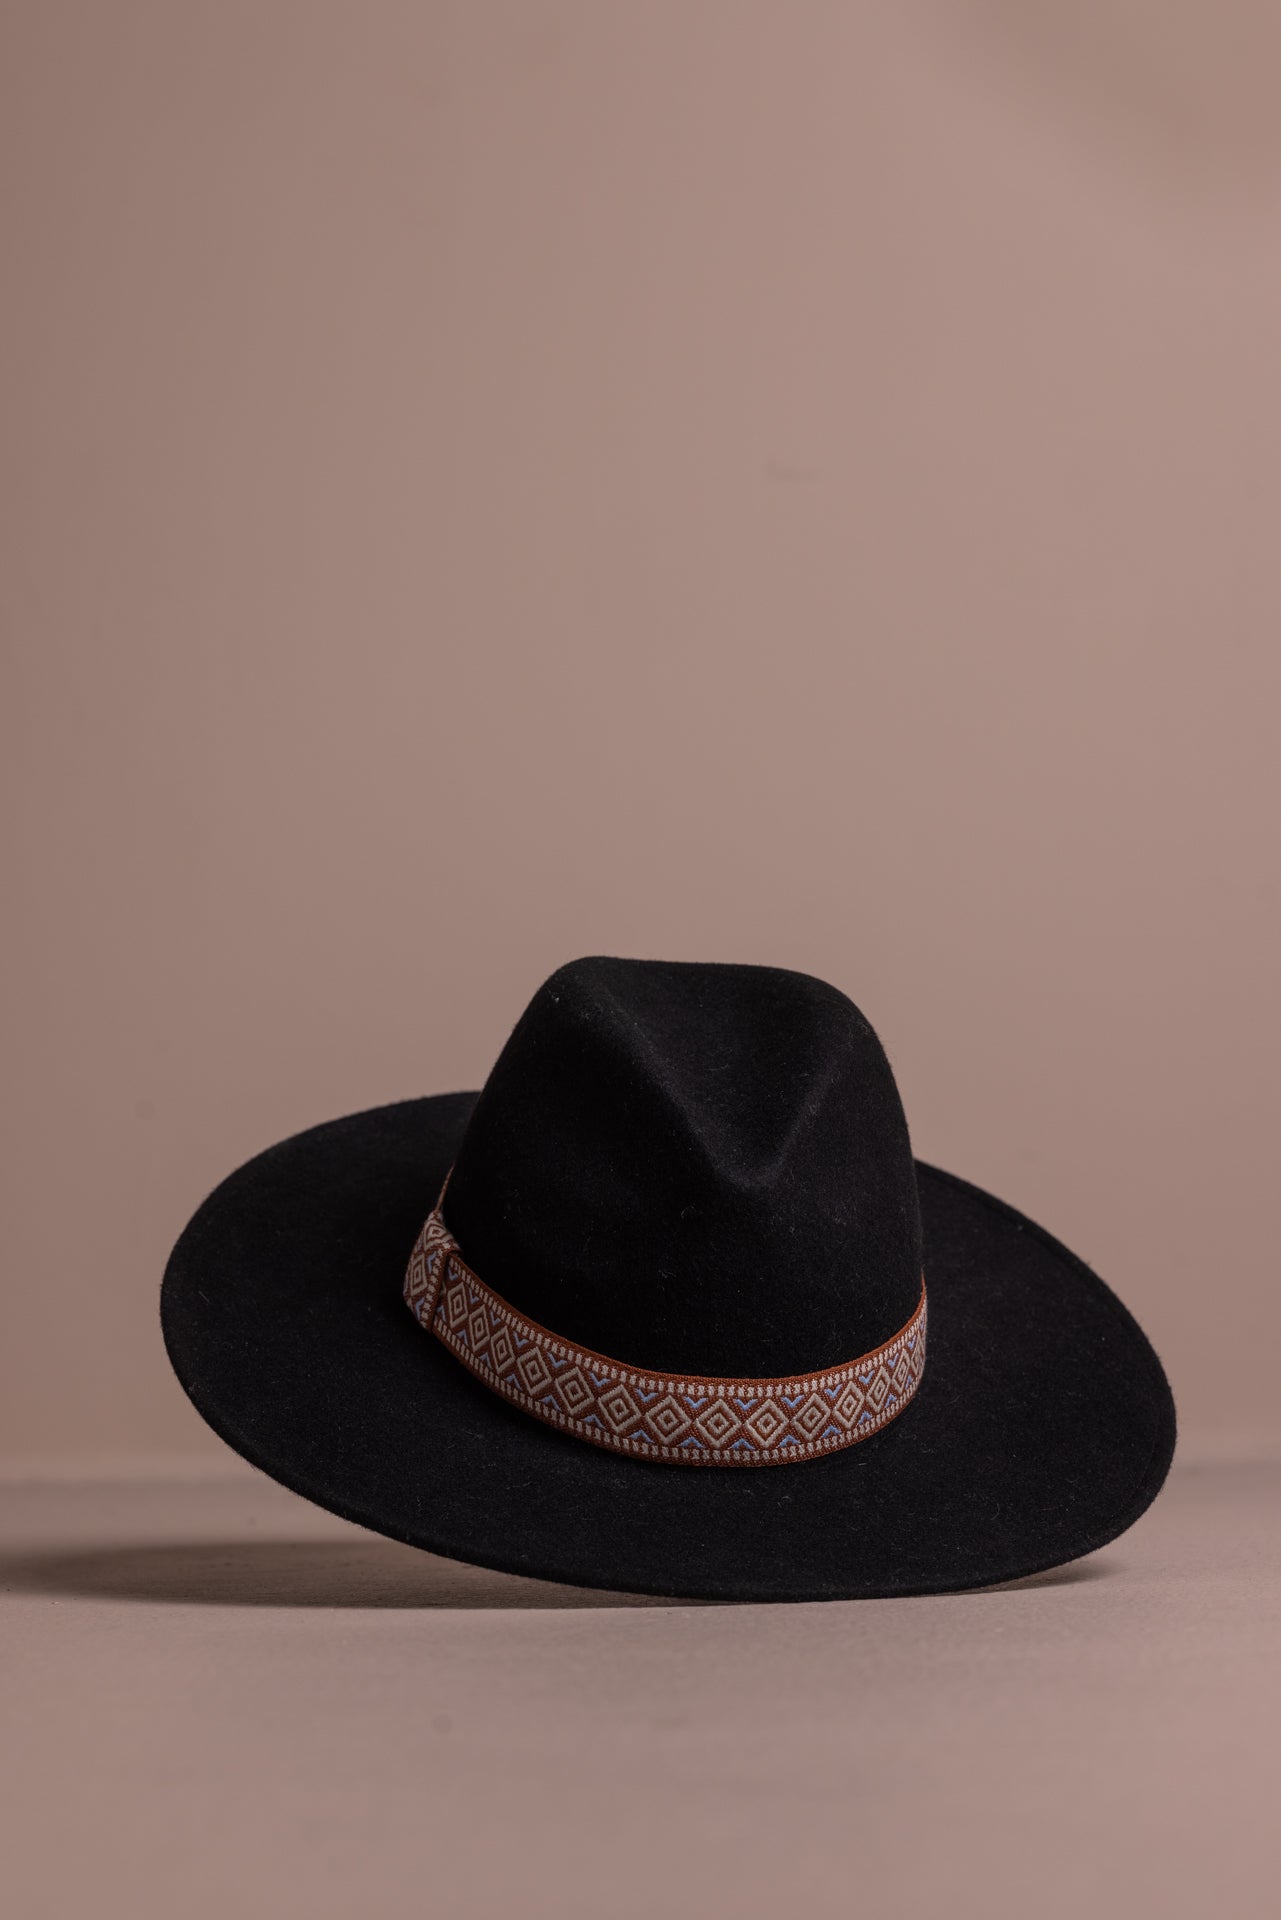 Fedora Hat - The Great Black